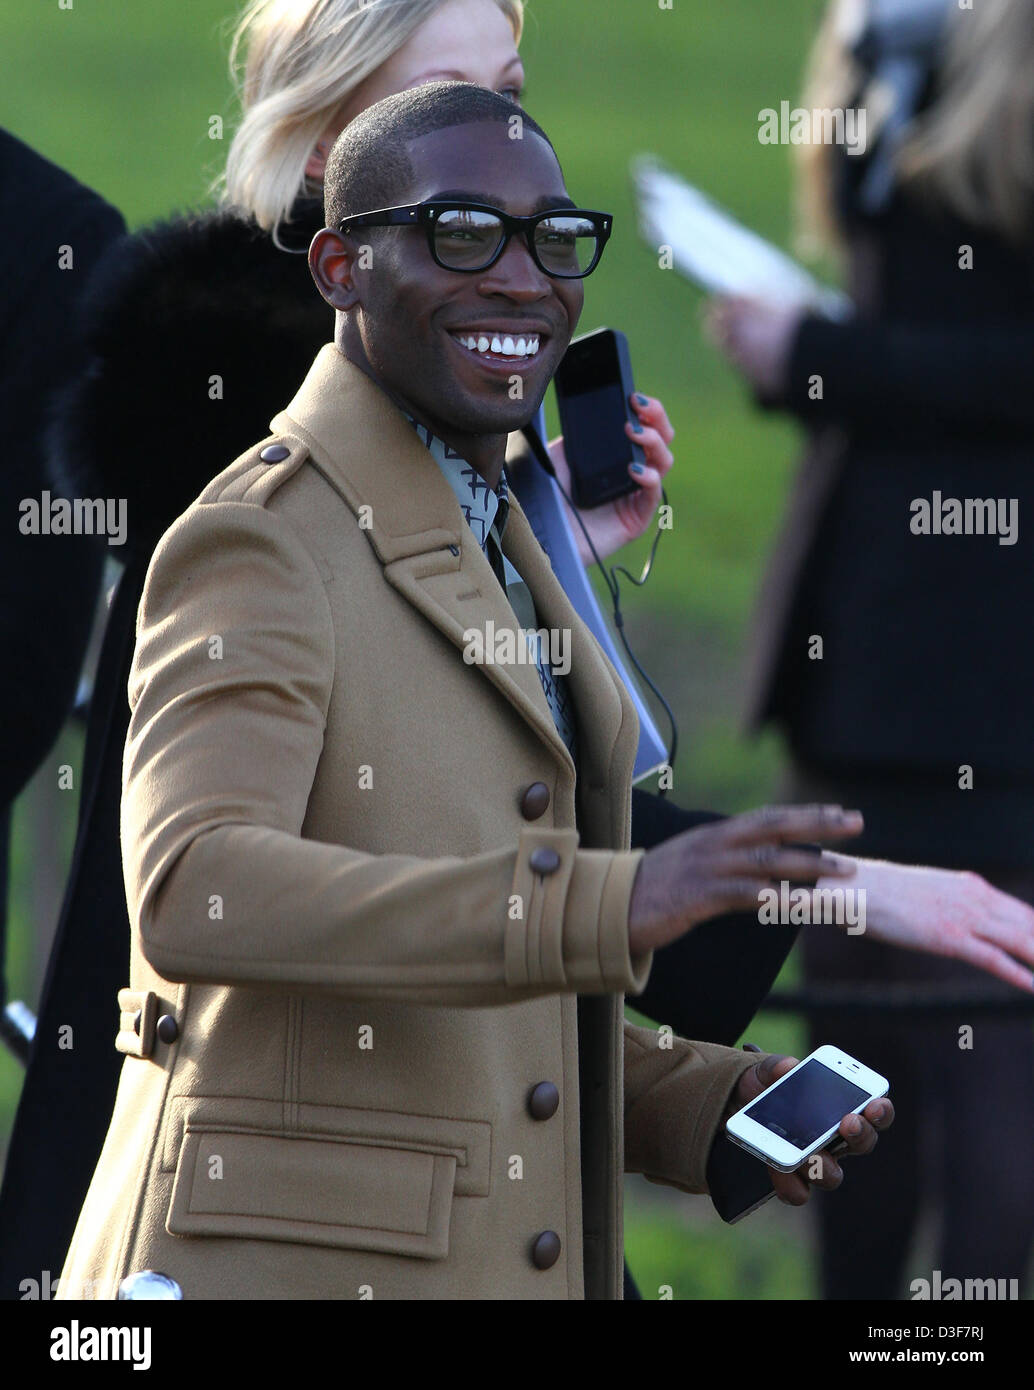 Tinnie Tempah arrives for the Burberry Prorsum - London Fashion Week show. Stock Photo